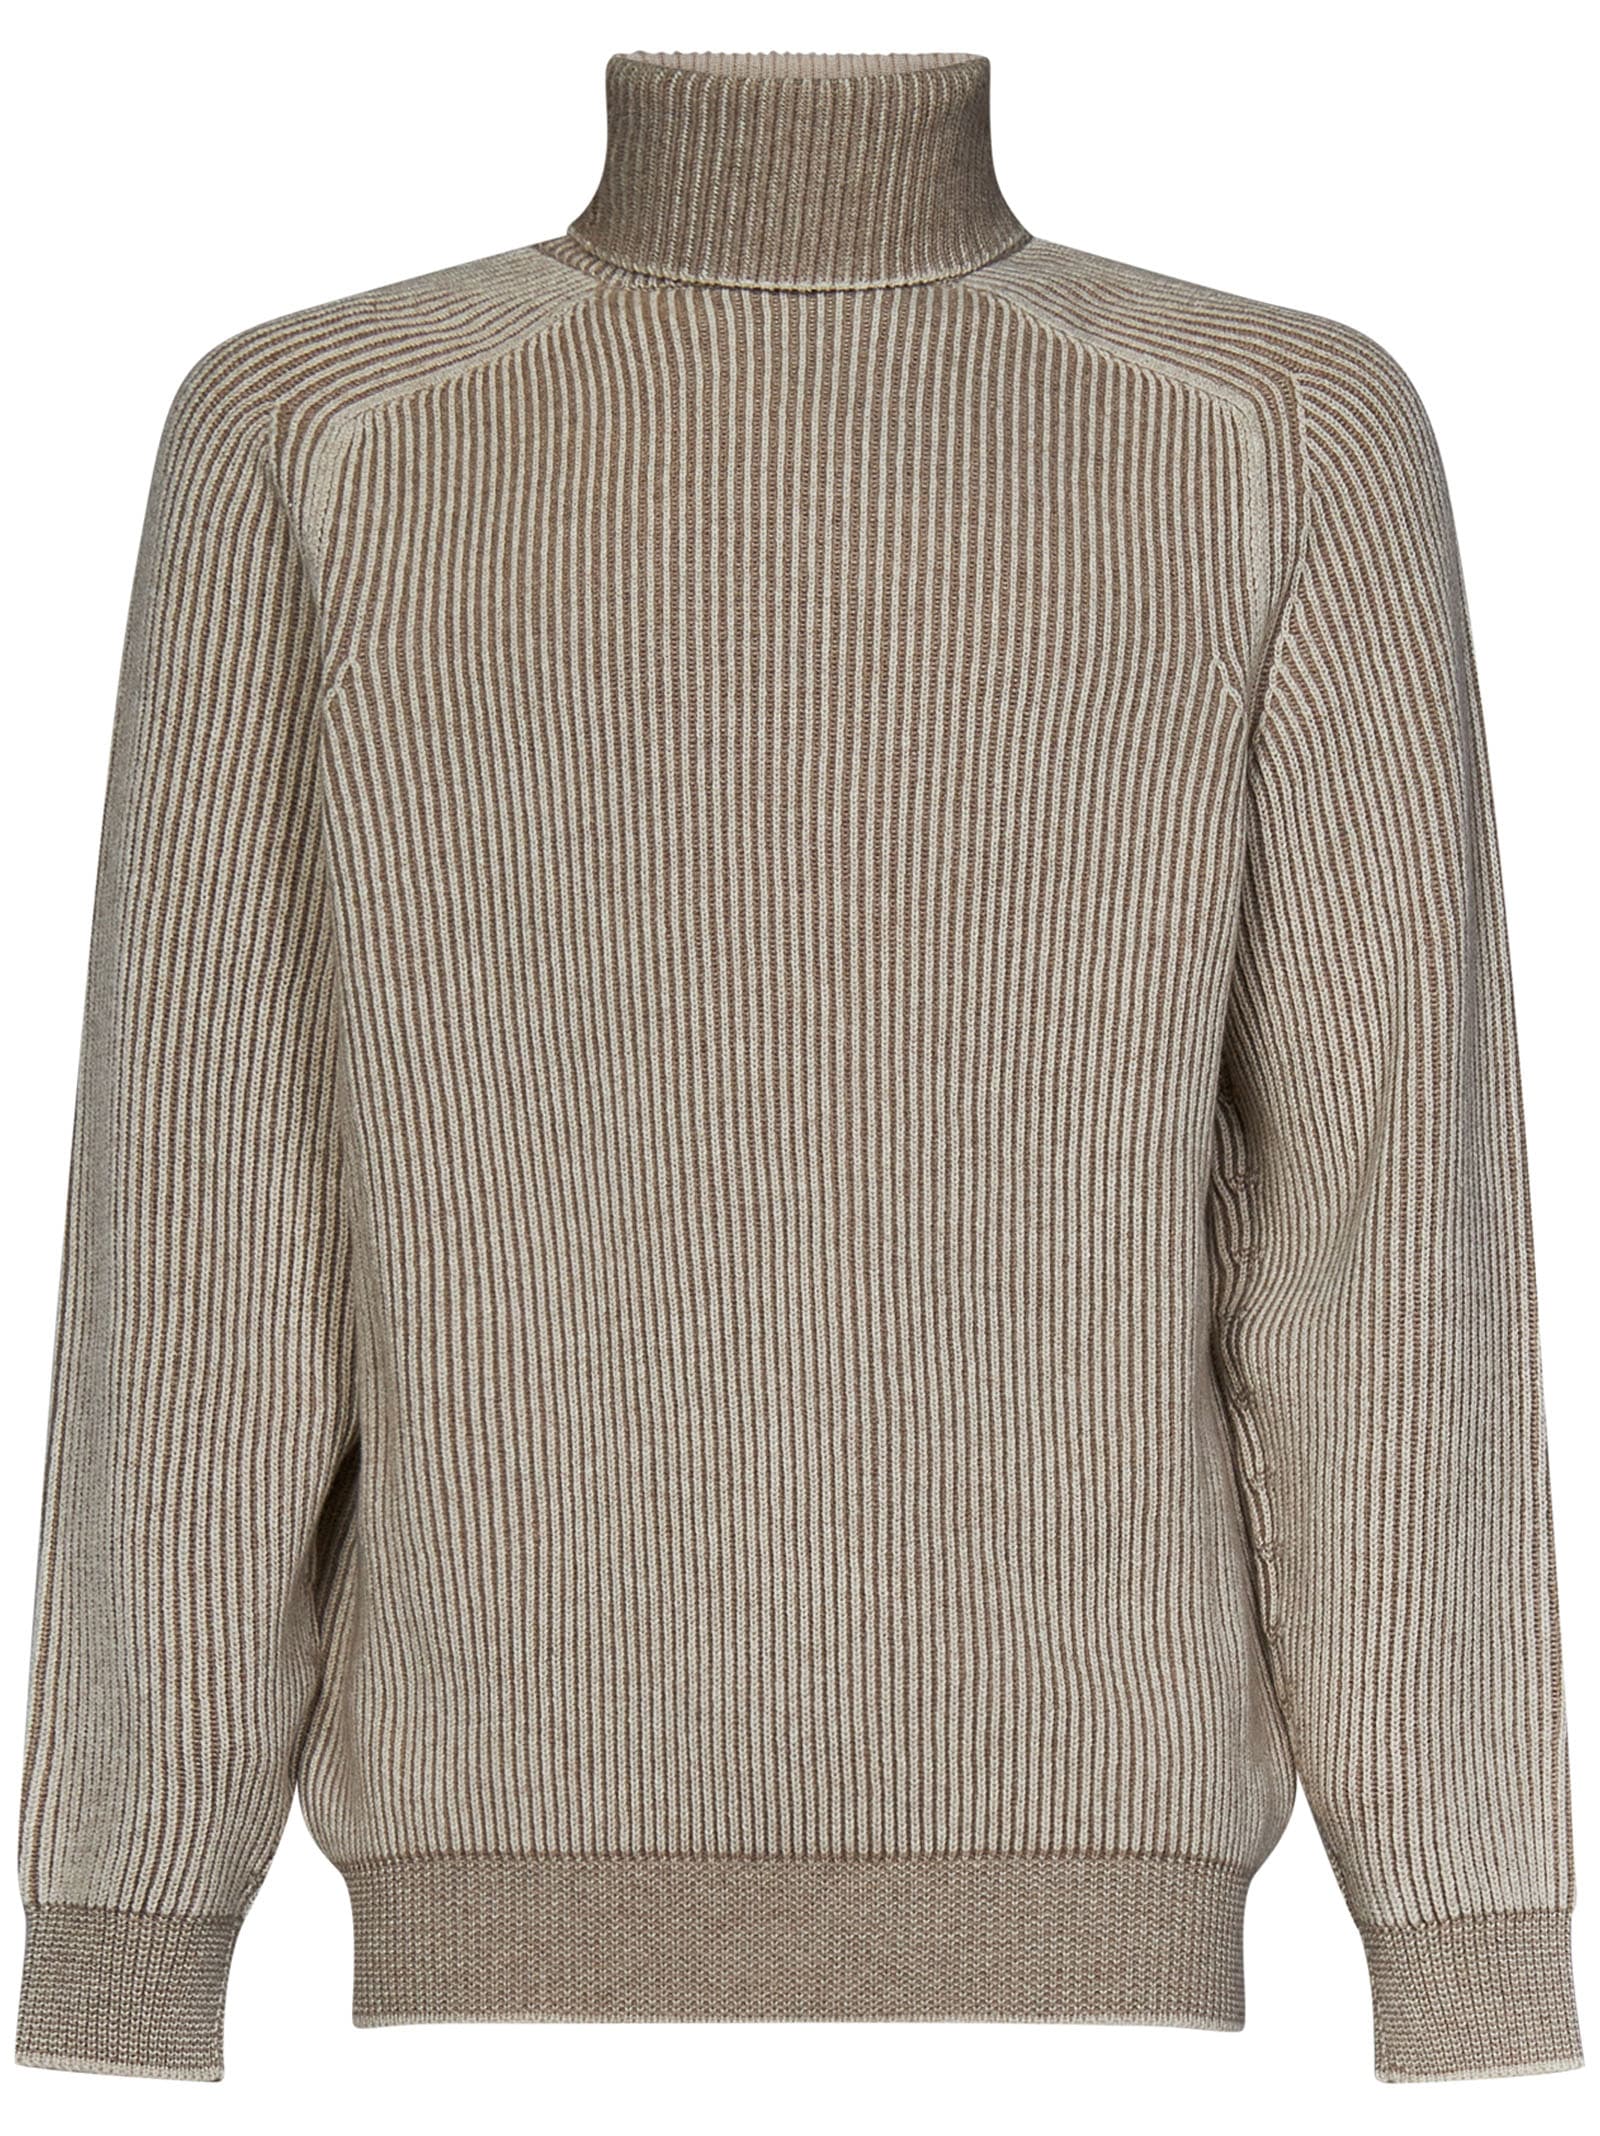 Shop Sease Sweater